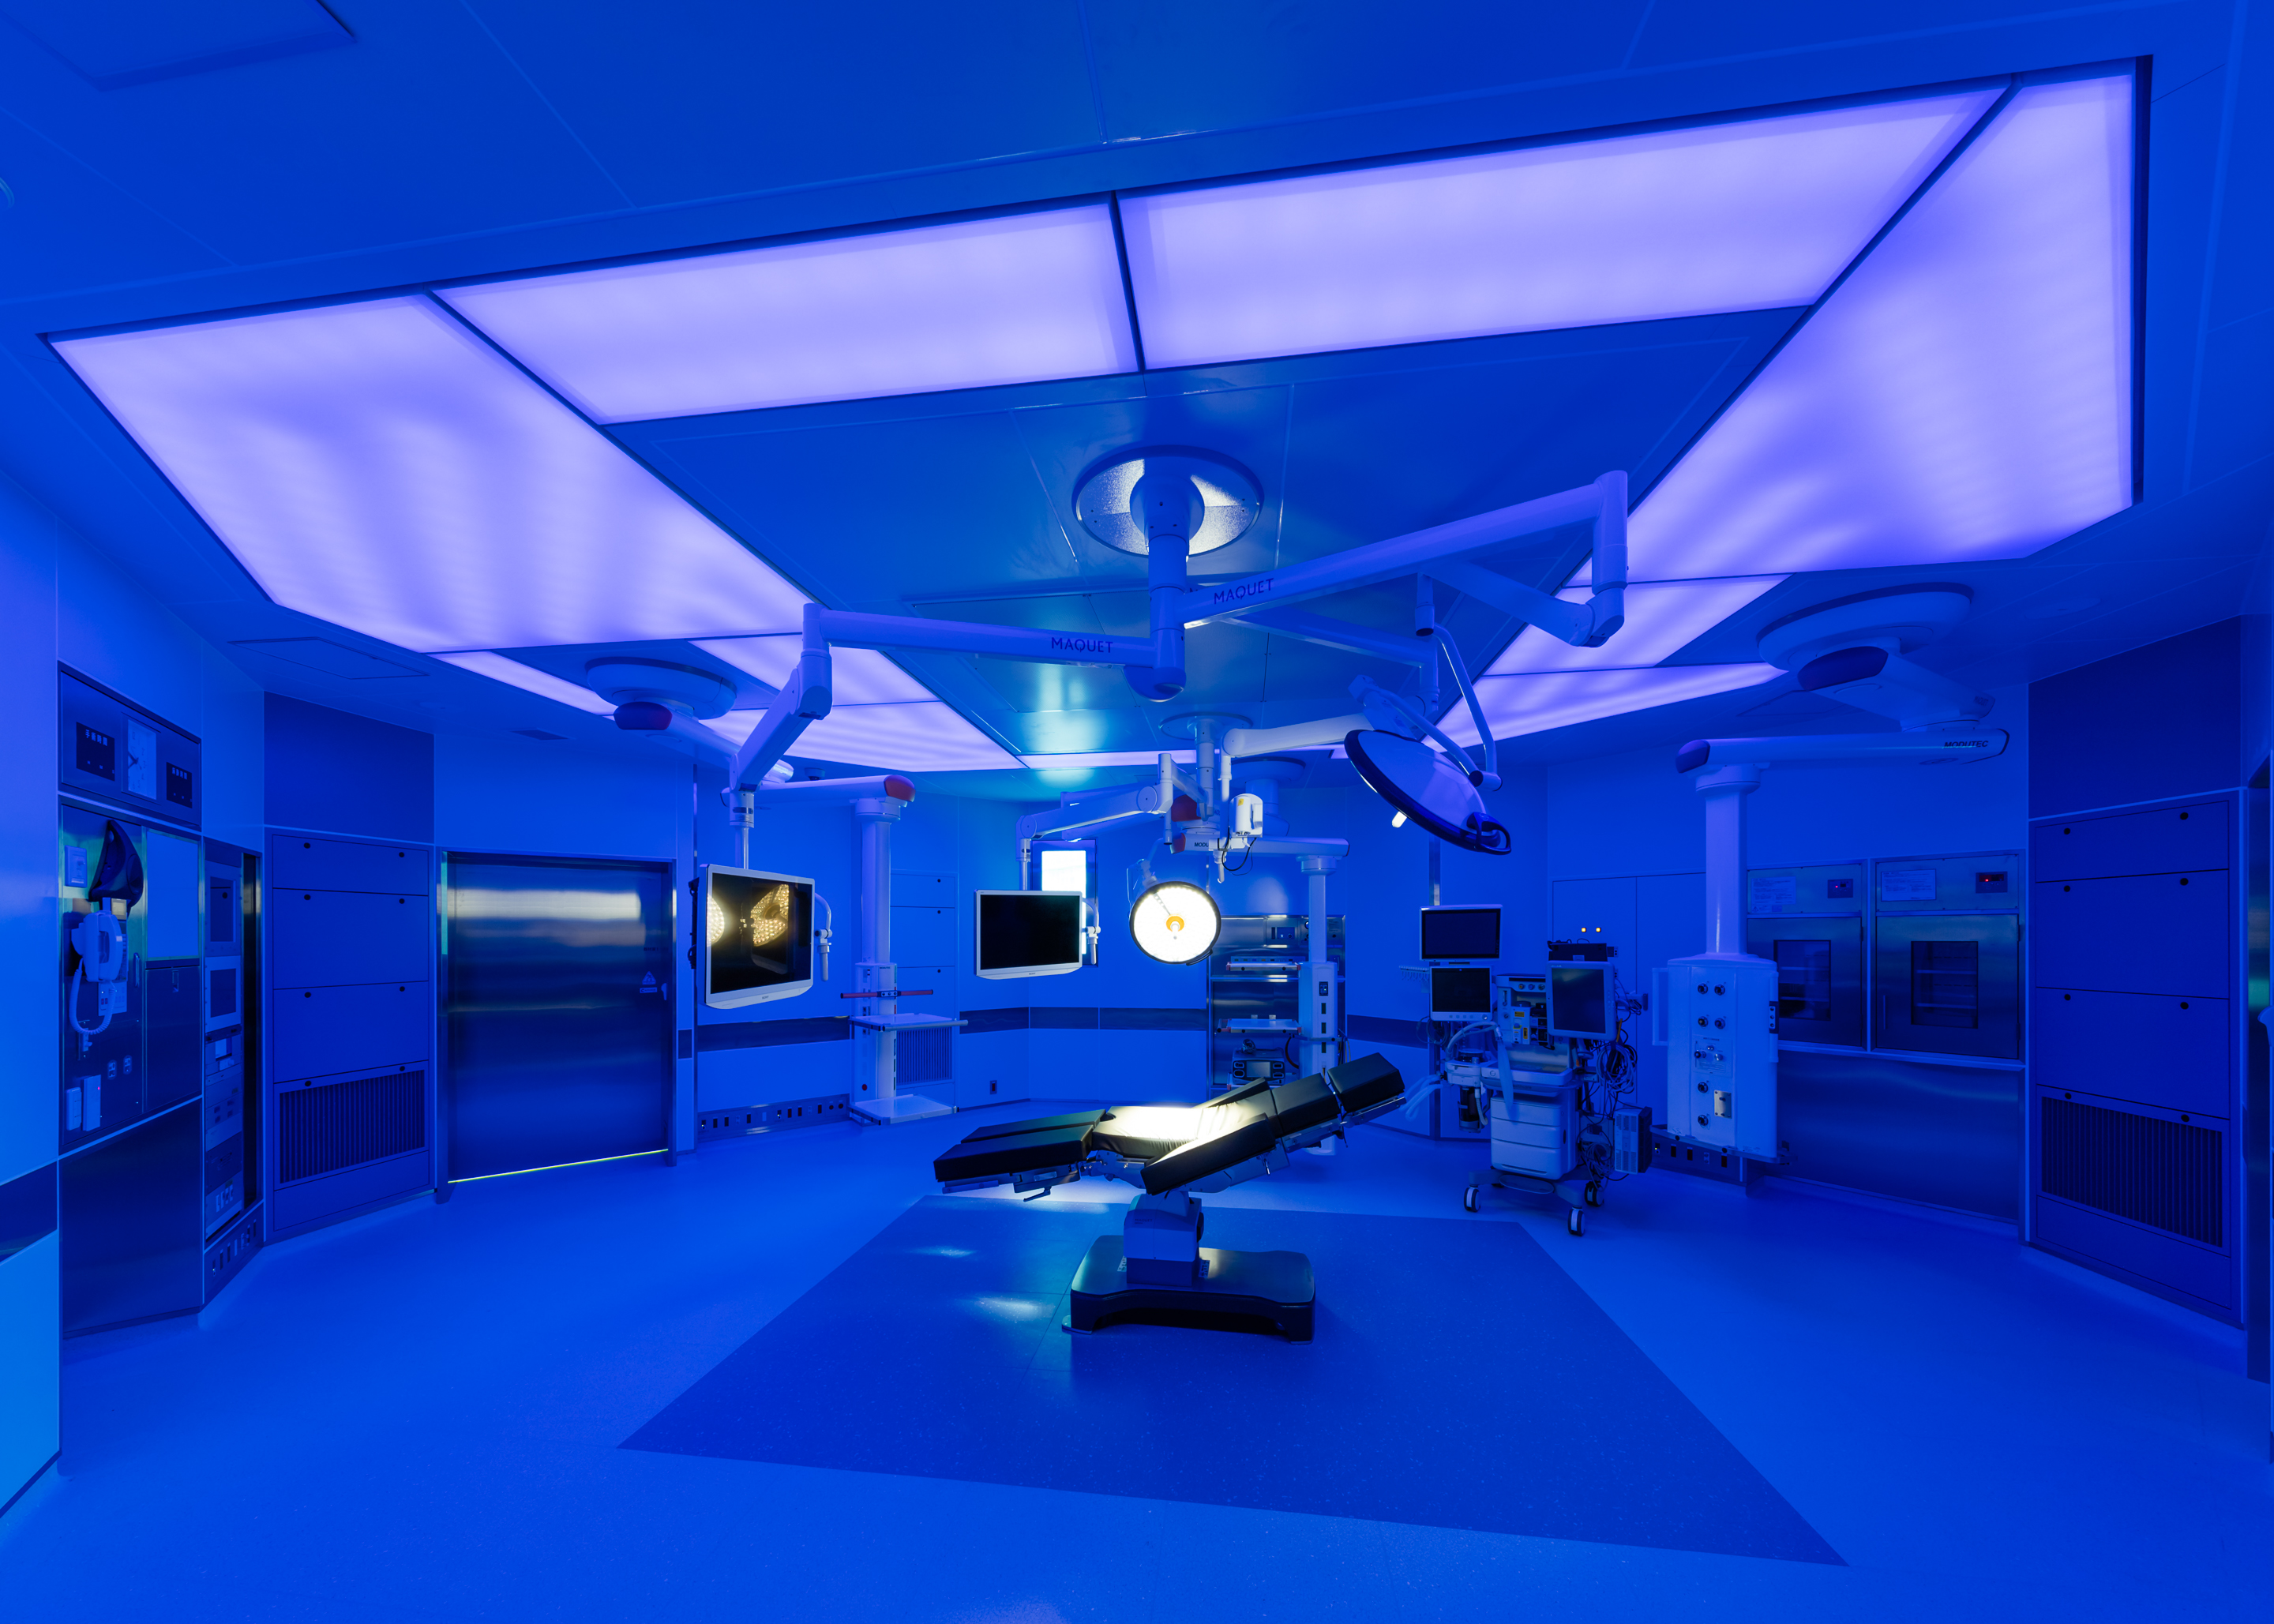 LED照明により手術シーンに合わせた微妙な光の調整が可能です